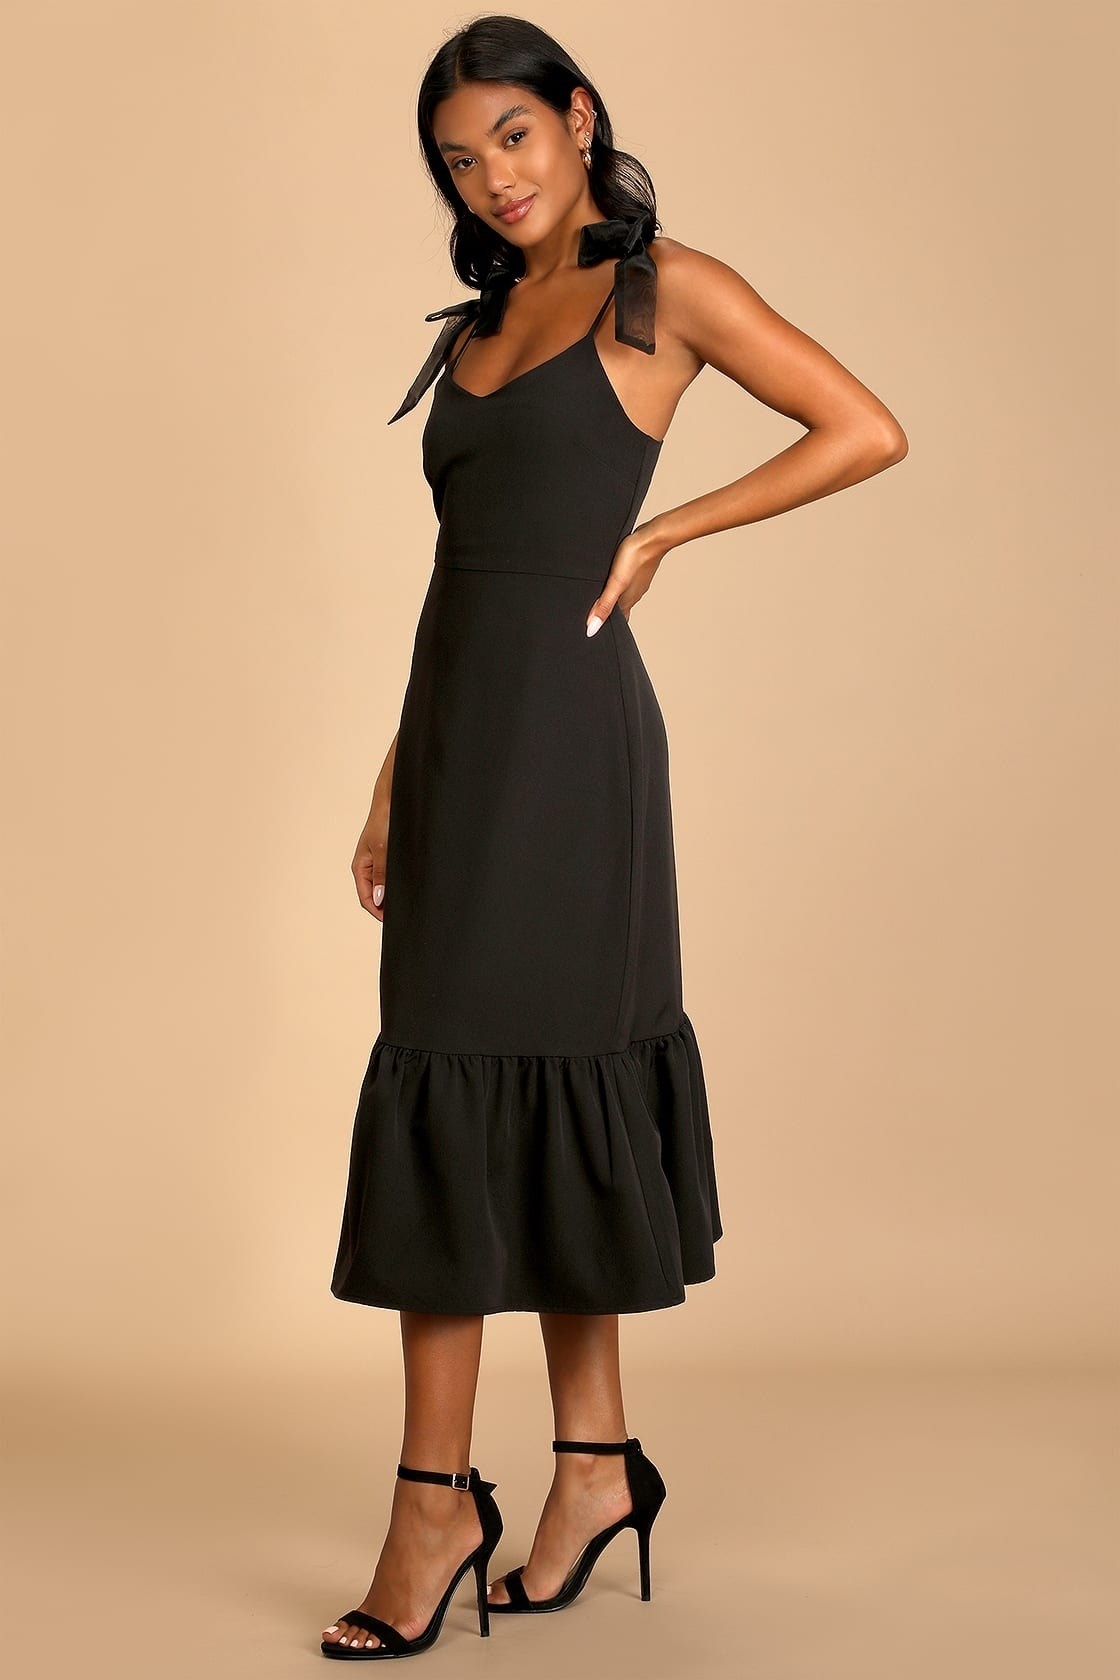 model wearing black sleeveless midi LBD with black heeled sandals